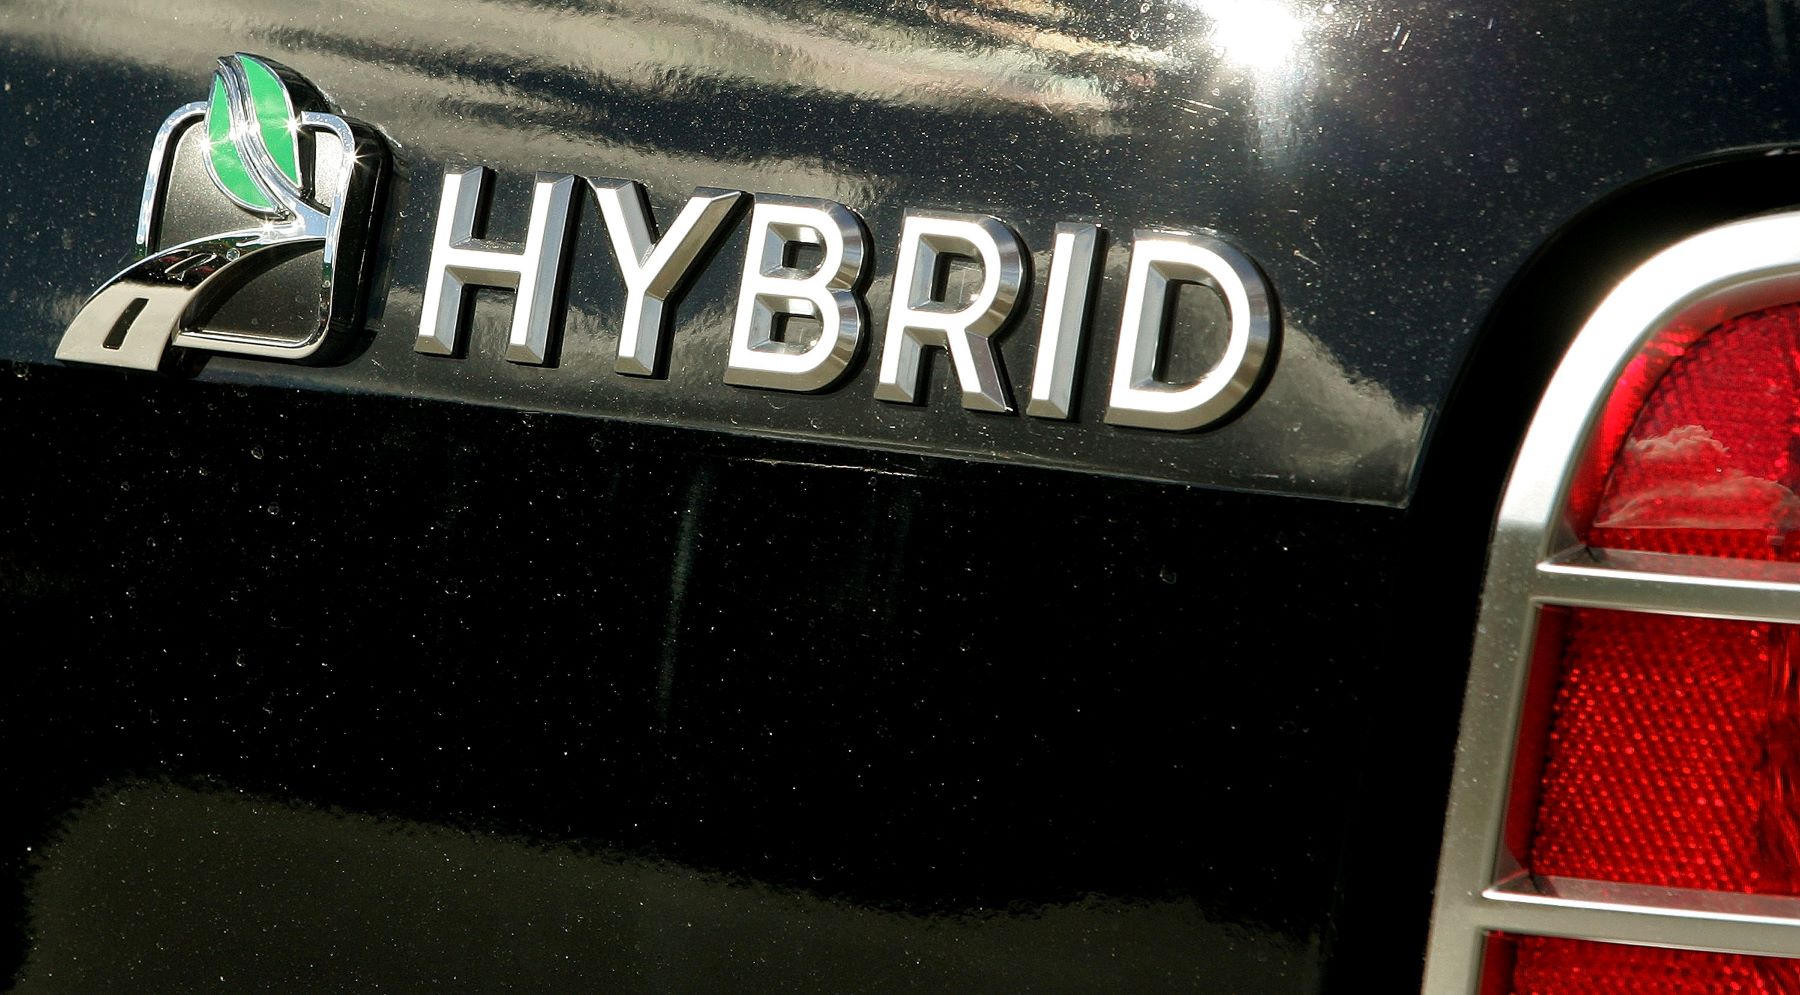 A Hybrid badge on a 2006 Mercury Mariner Hybrid SUV model